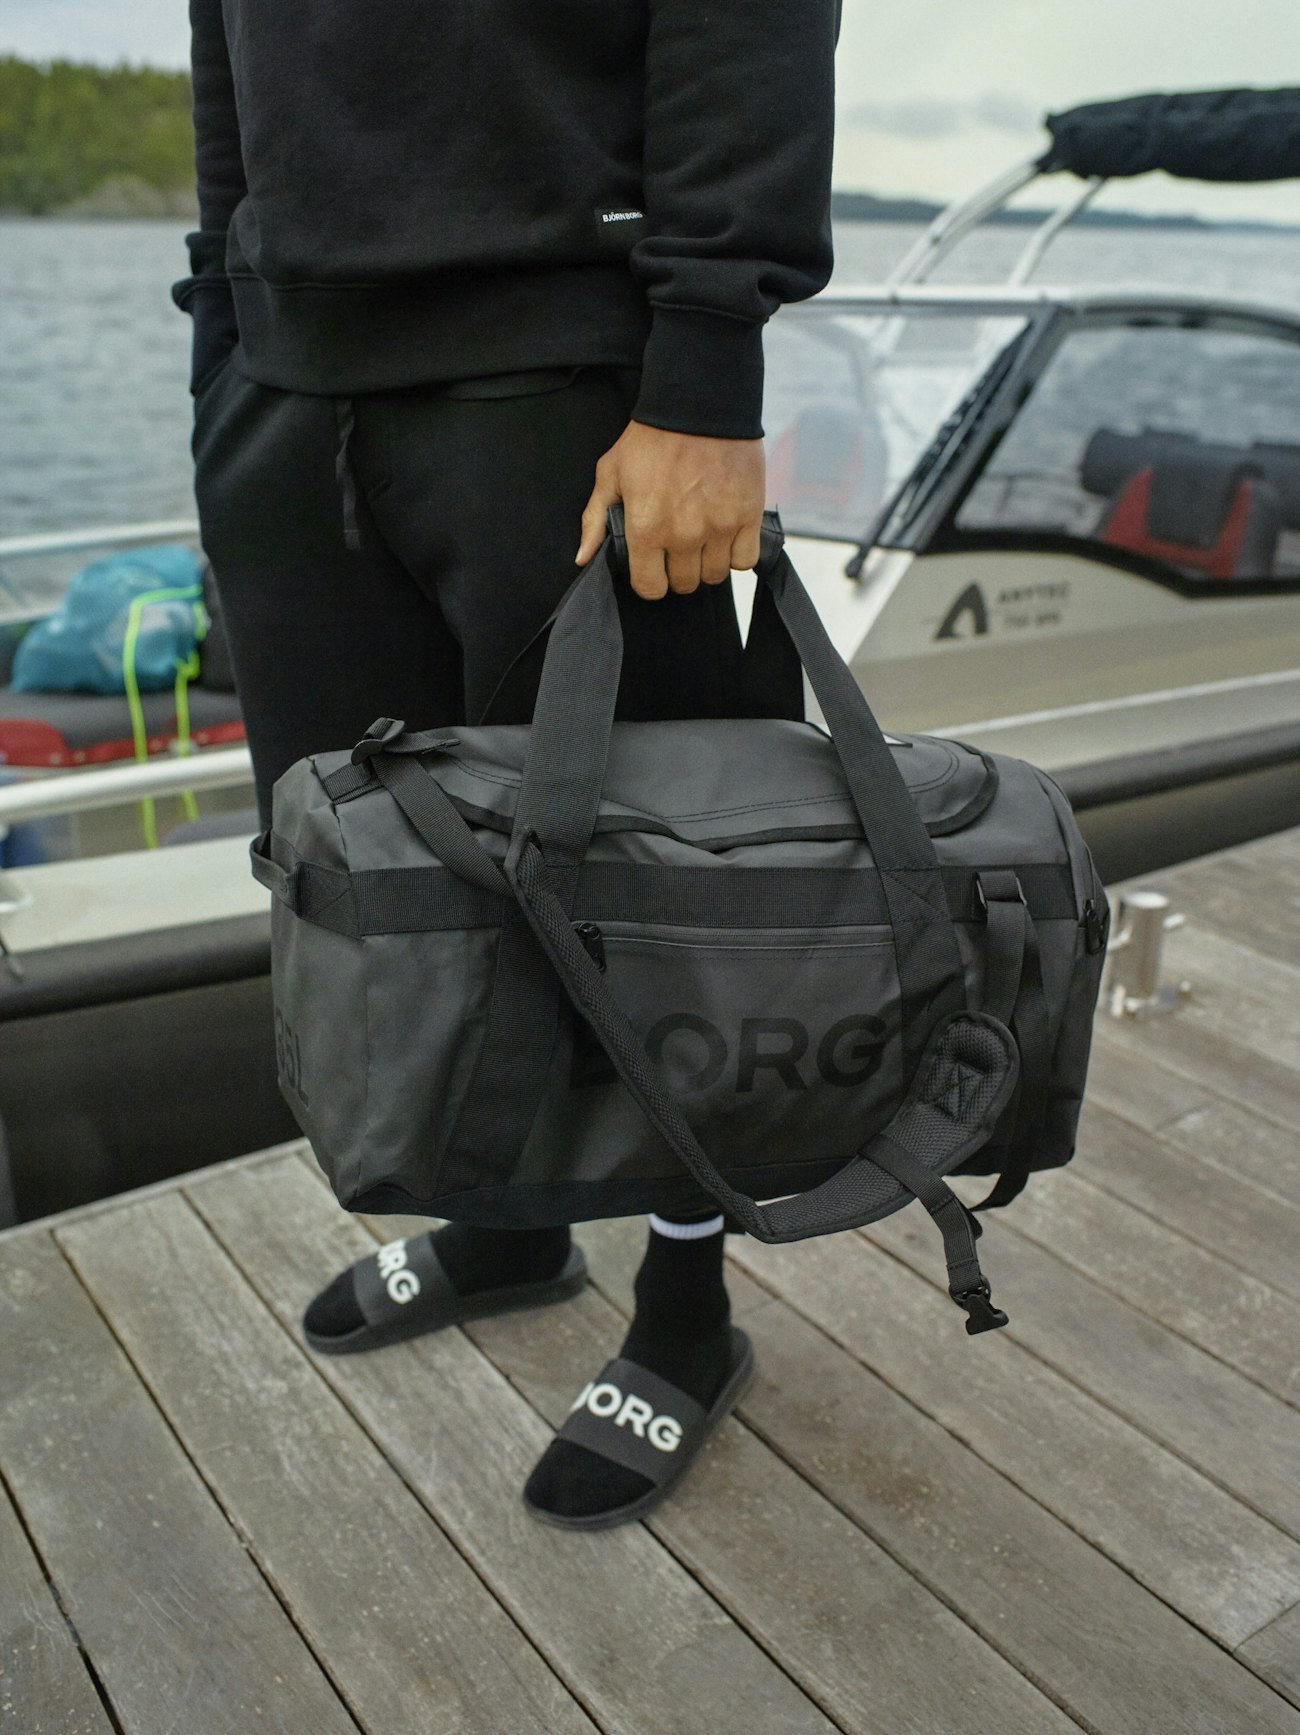 Borg Duffle Bag 55L - Black